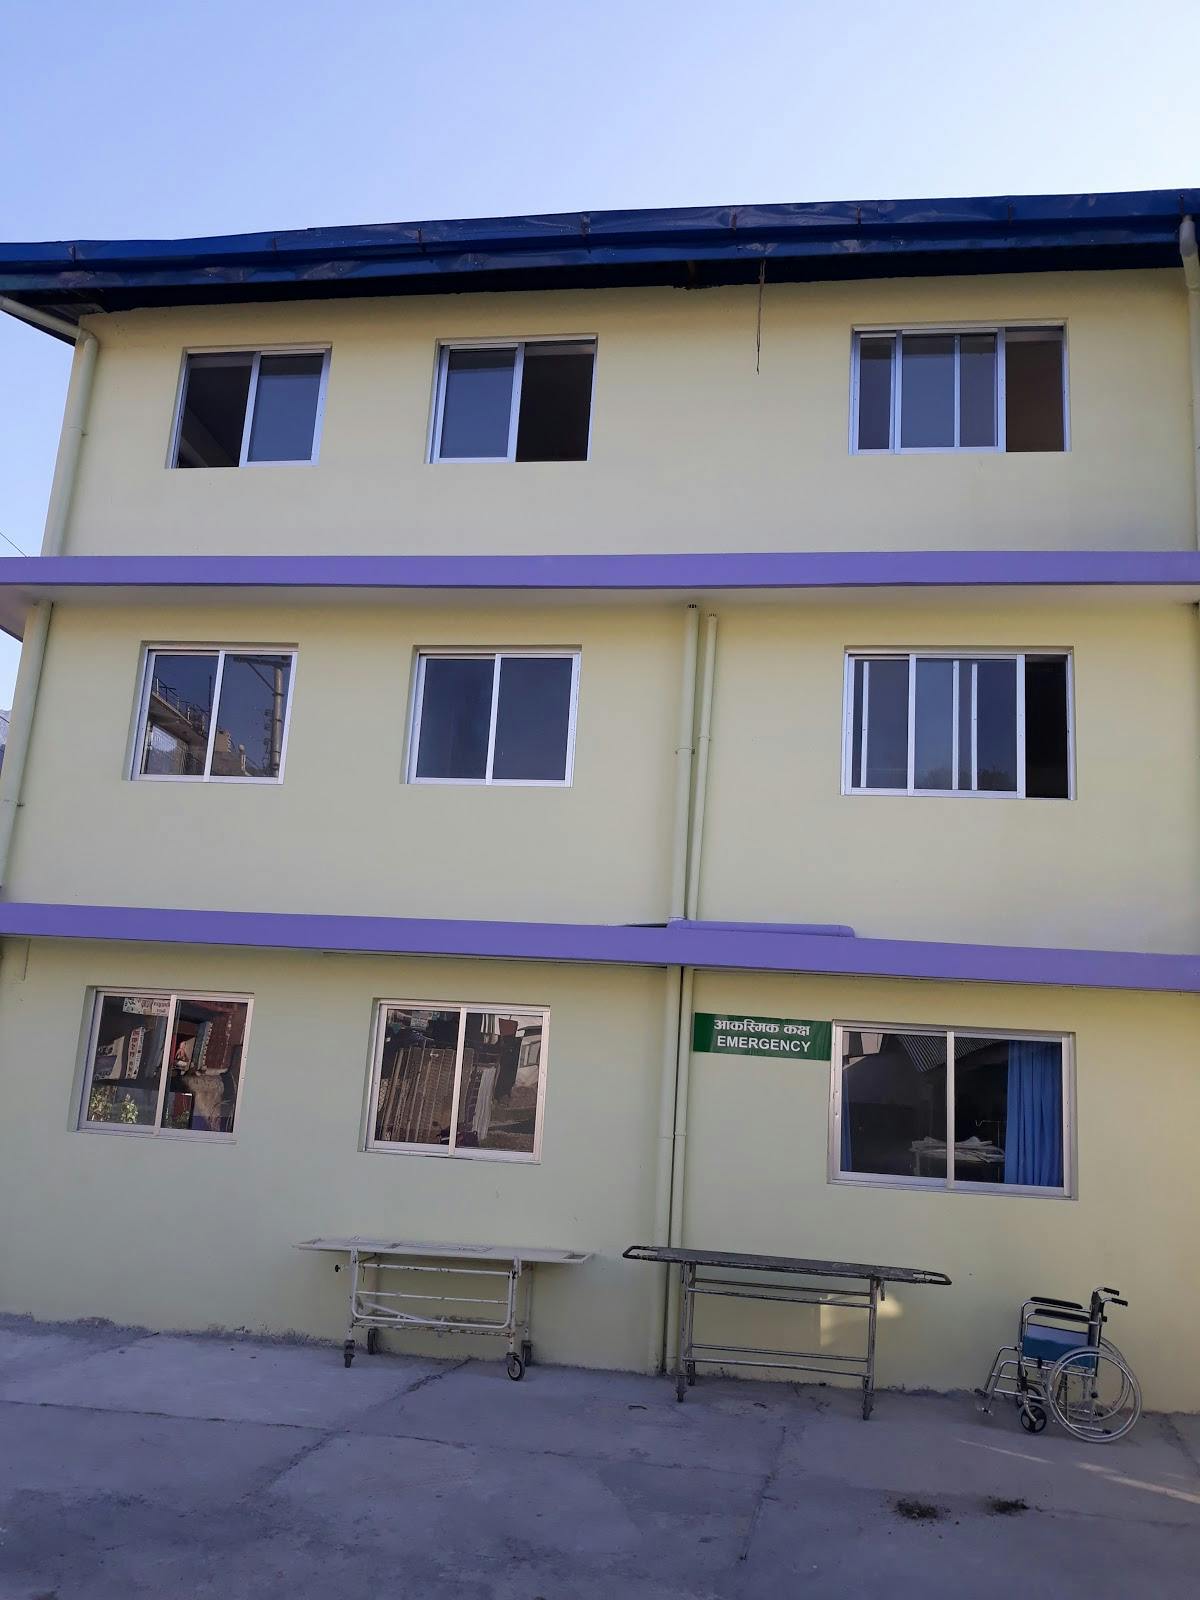 Image - Lamjung Community Hospital